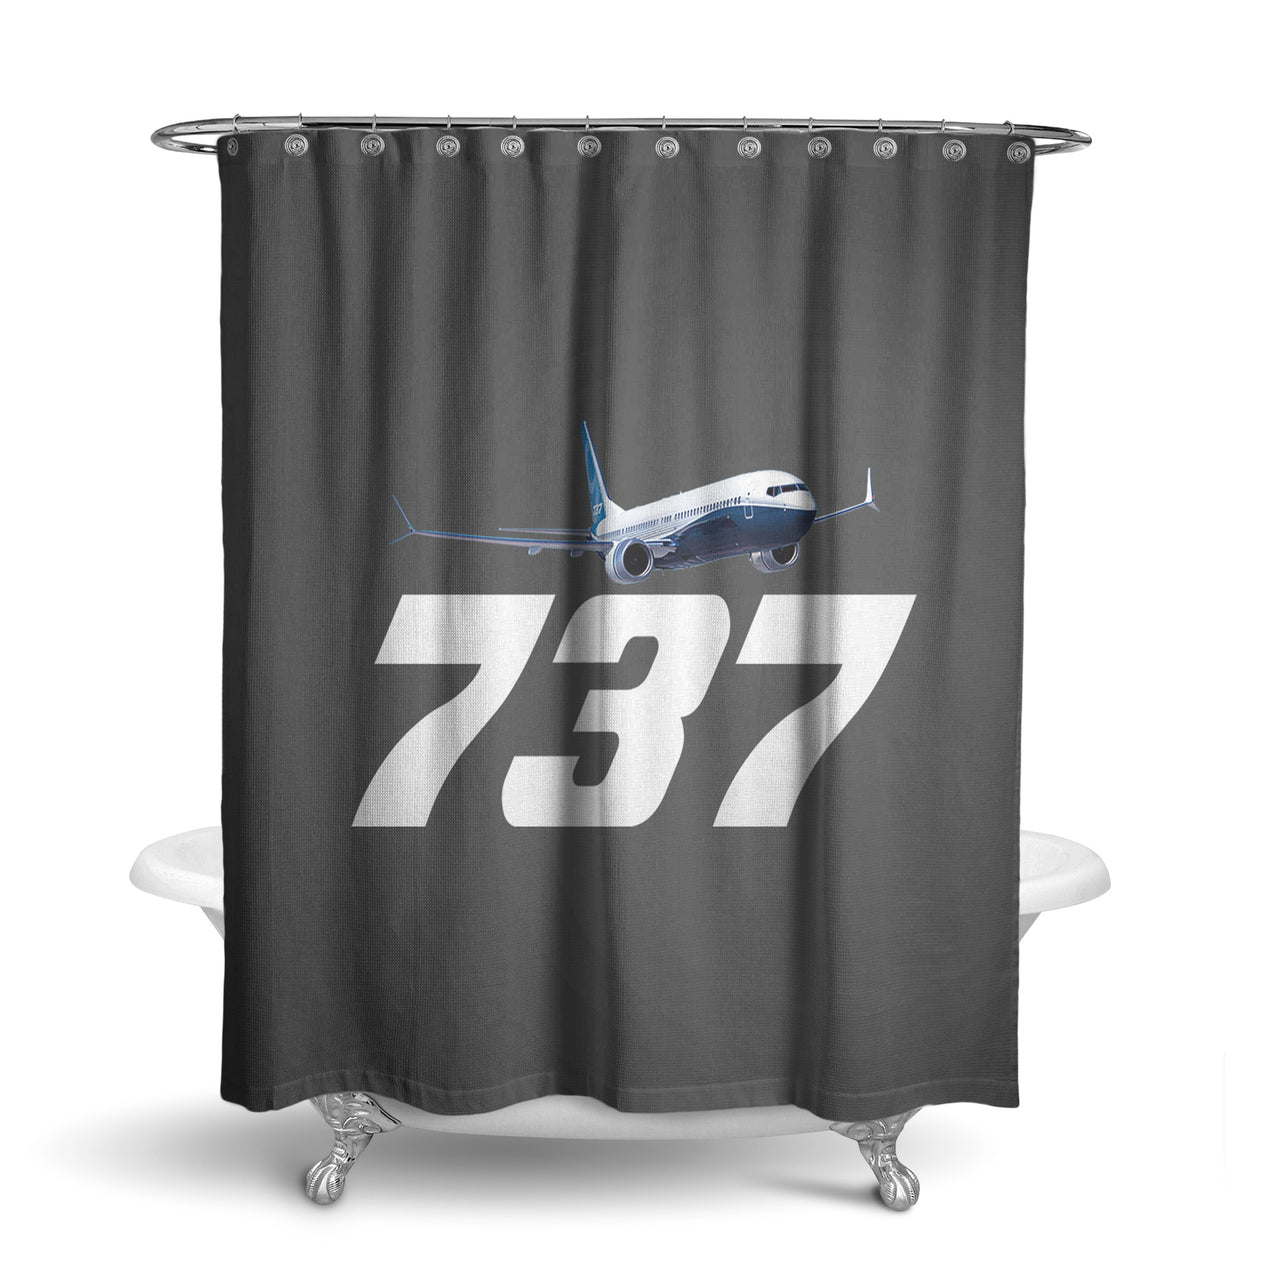 Super Boeing 737-800 Designed Shower Curtains